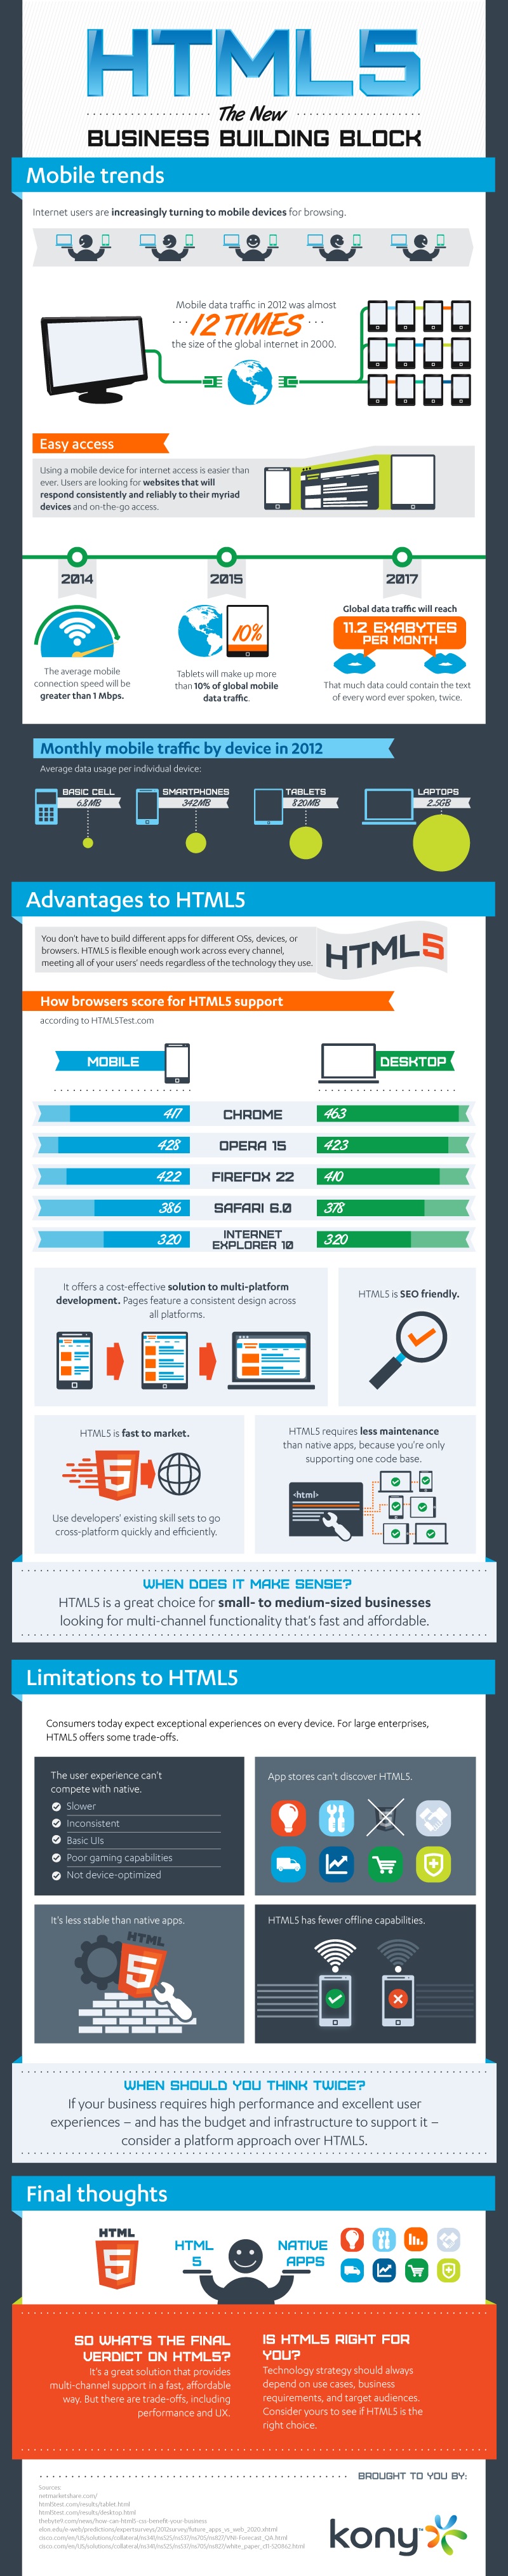 HTML5 Infographic